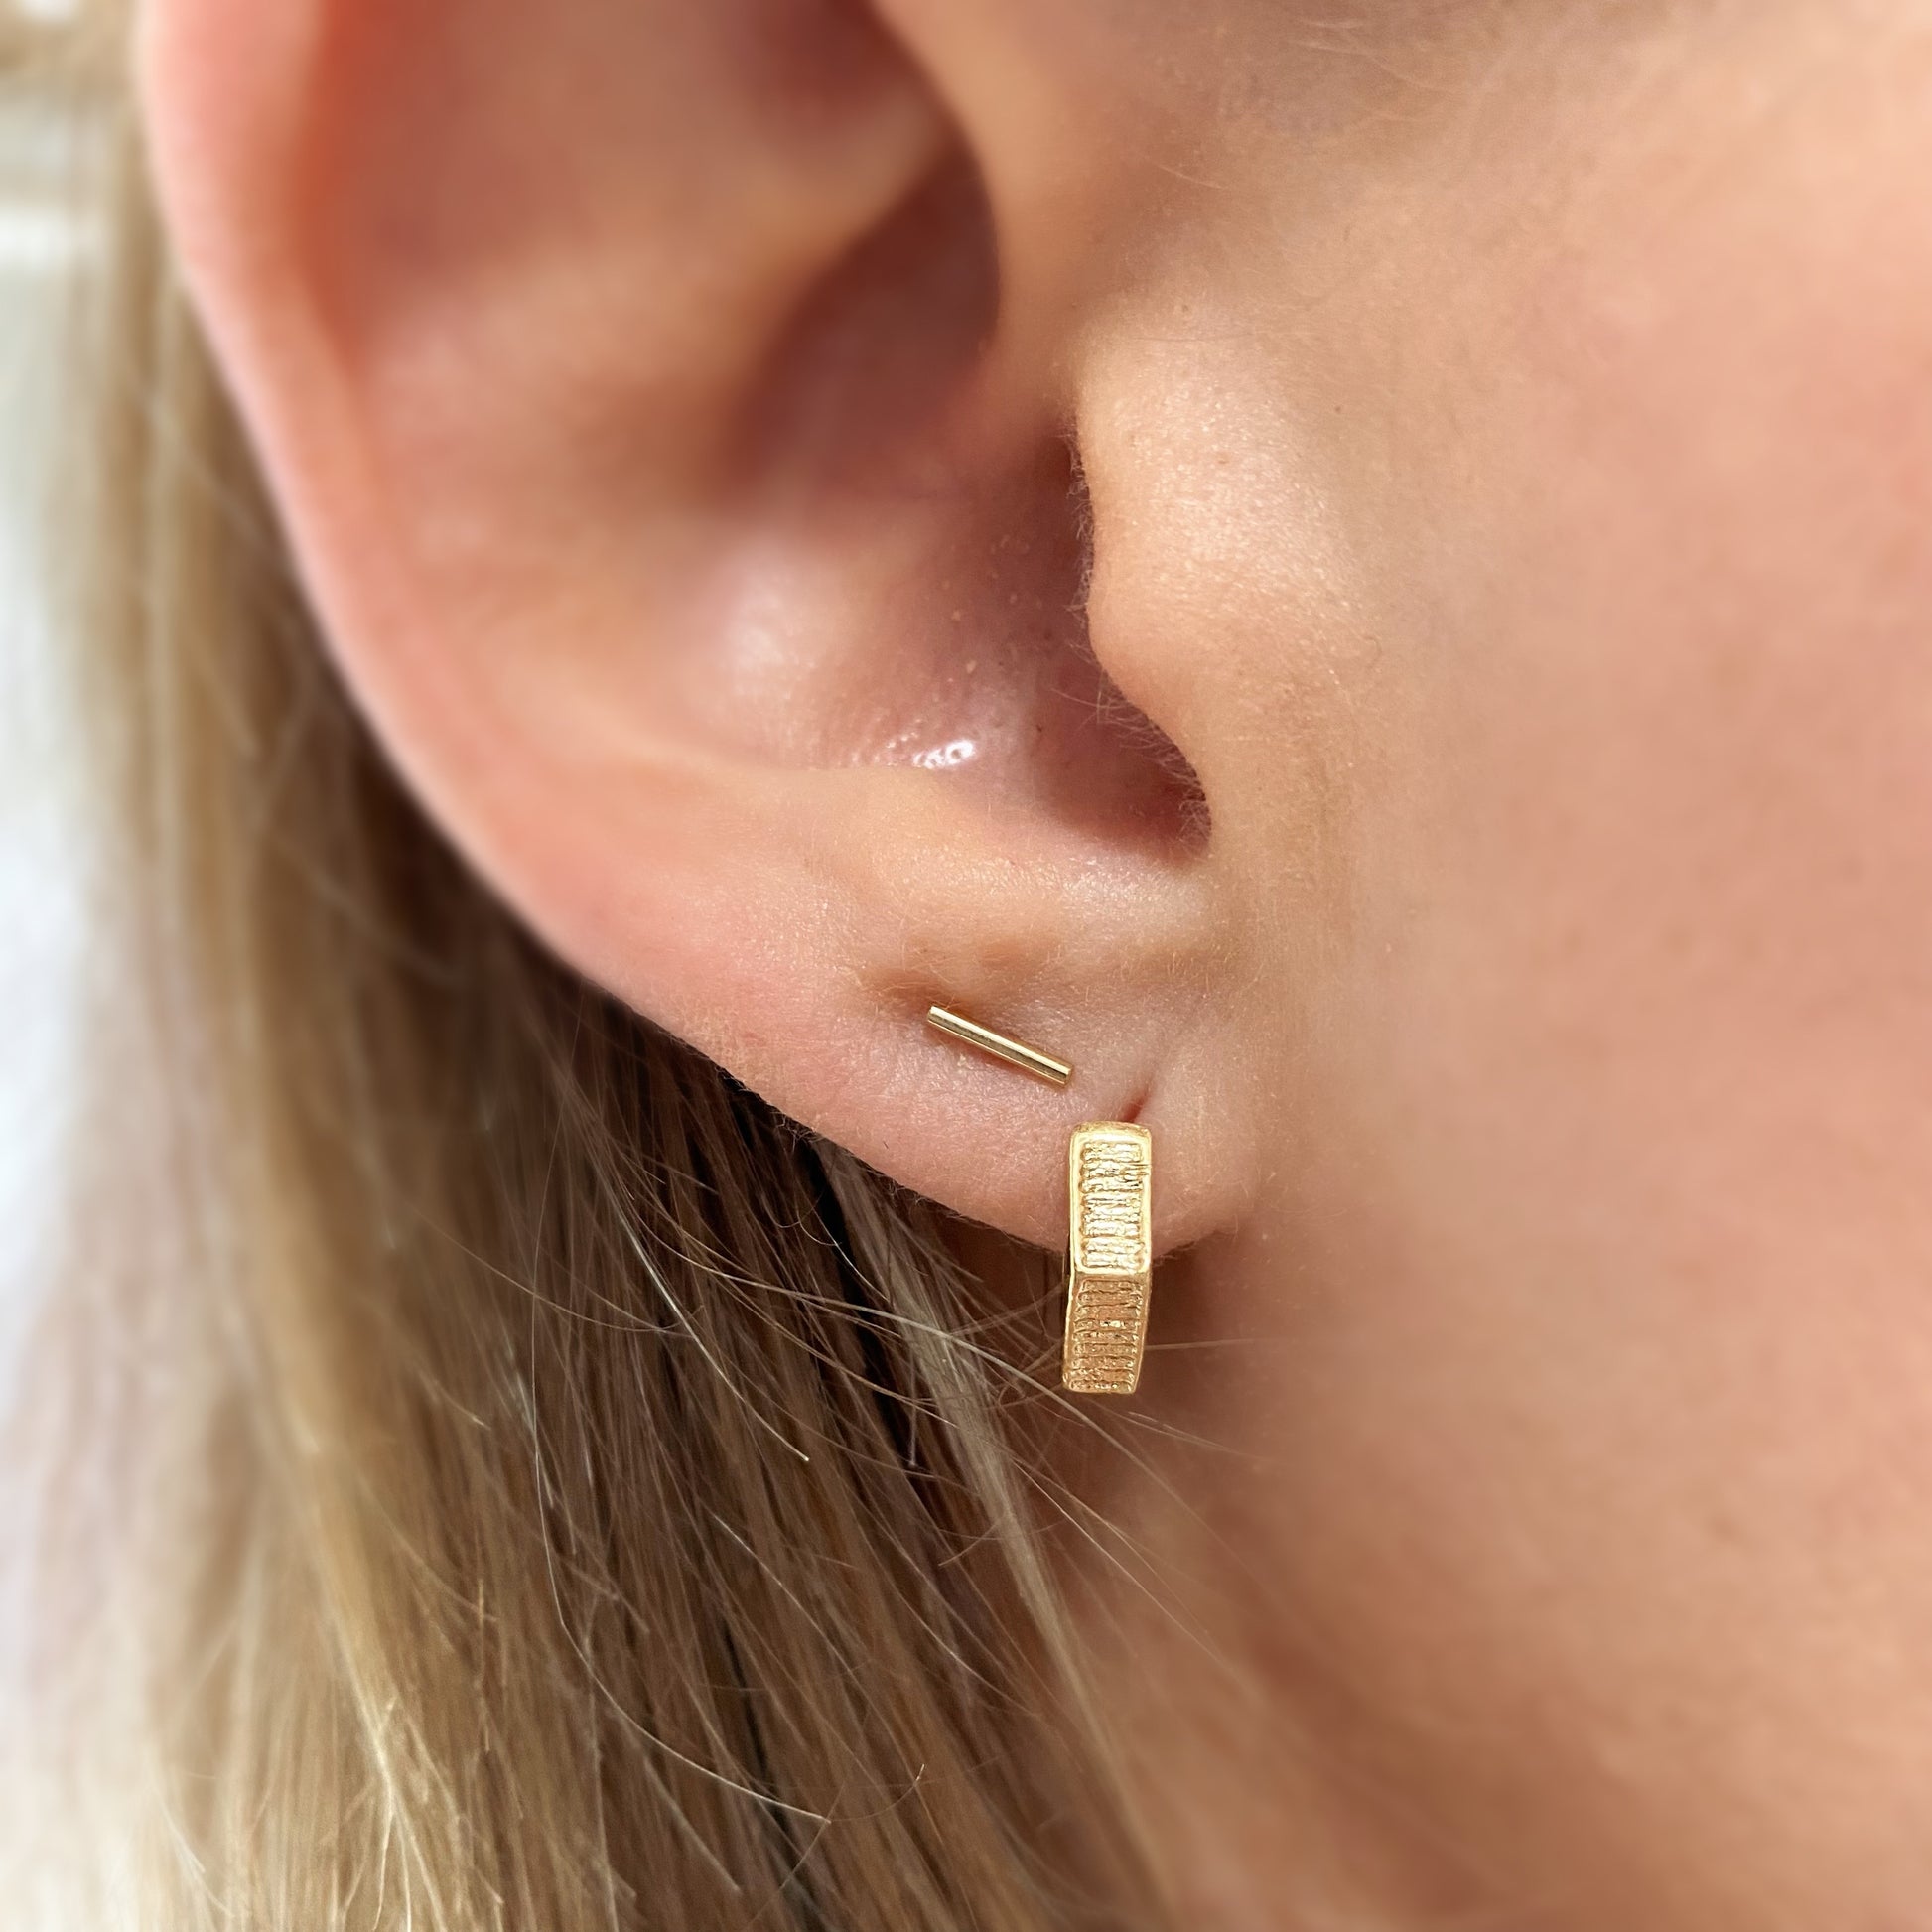 GoldFi 14k Gold Filled Petite Bar Stud Earrings